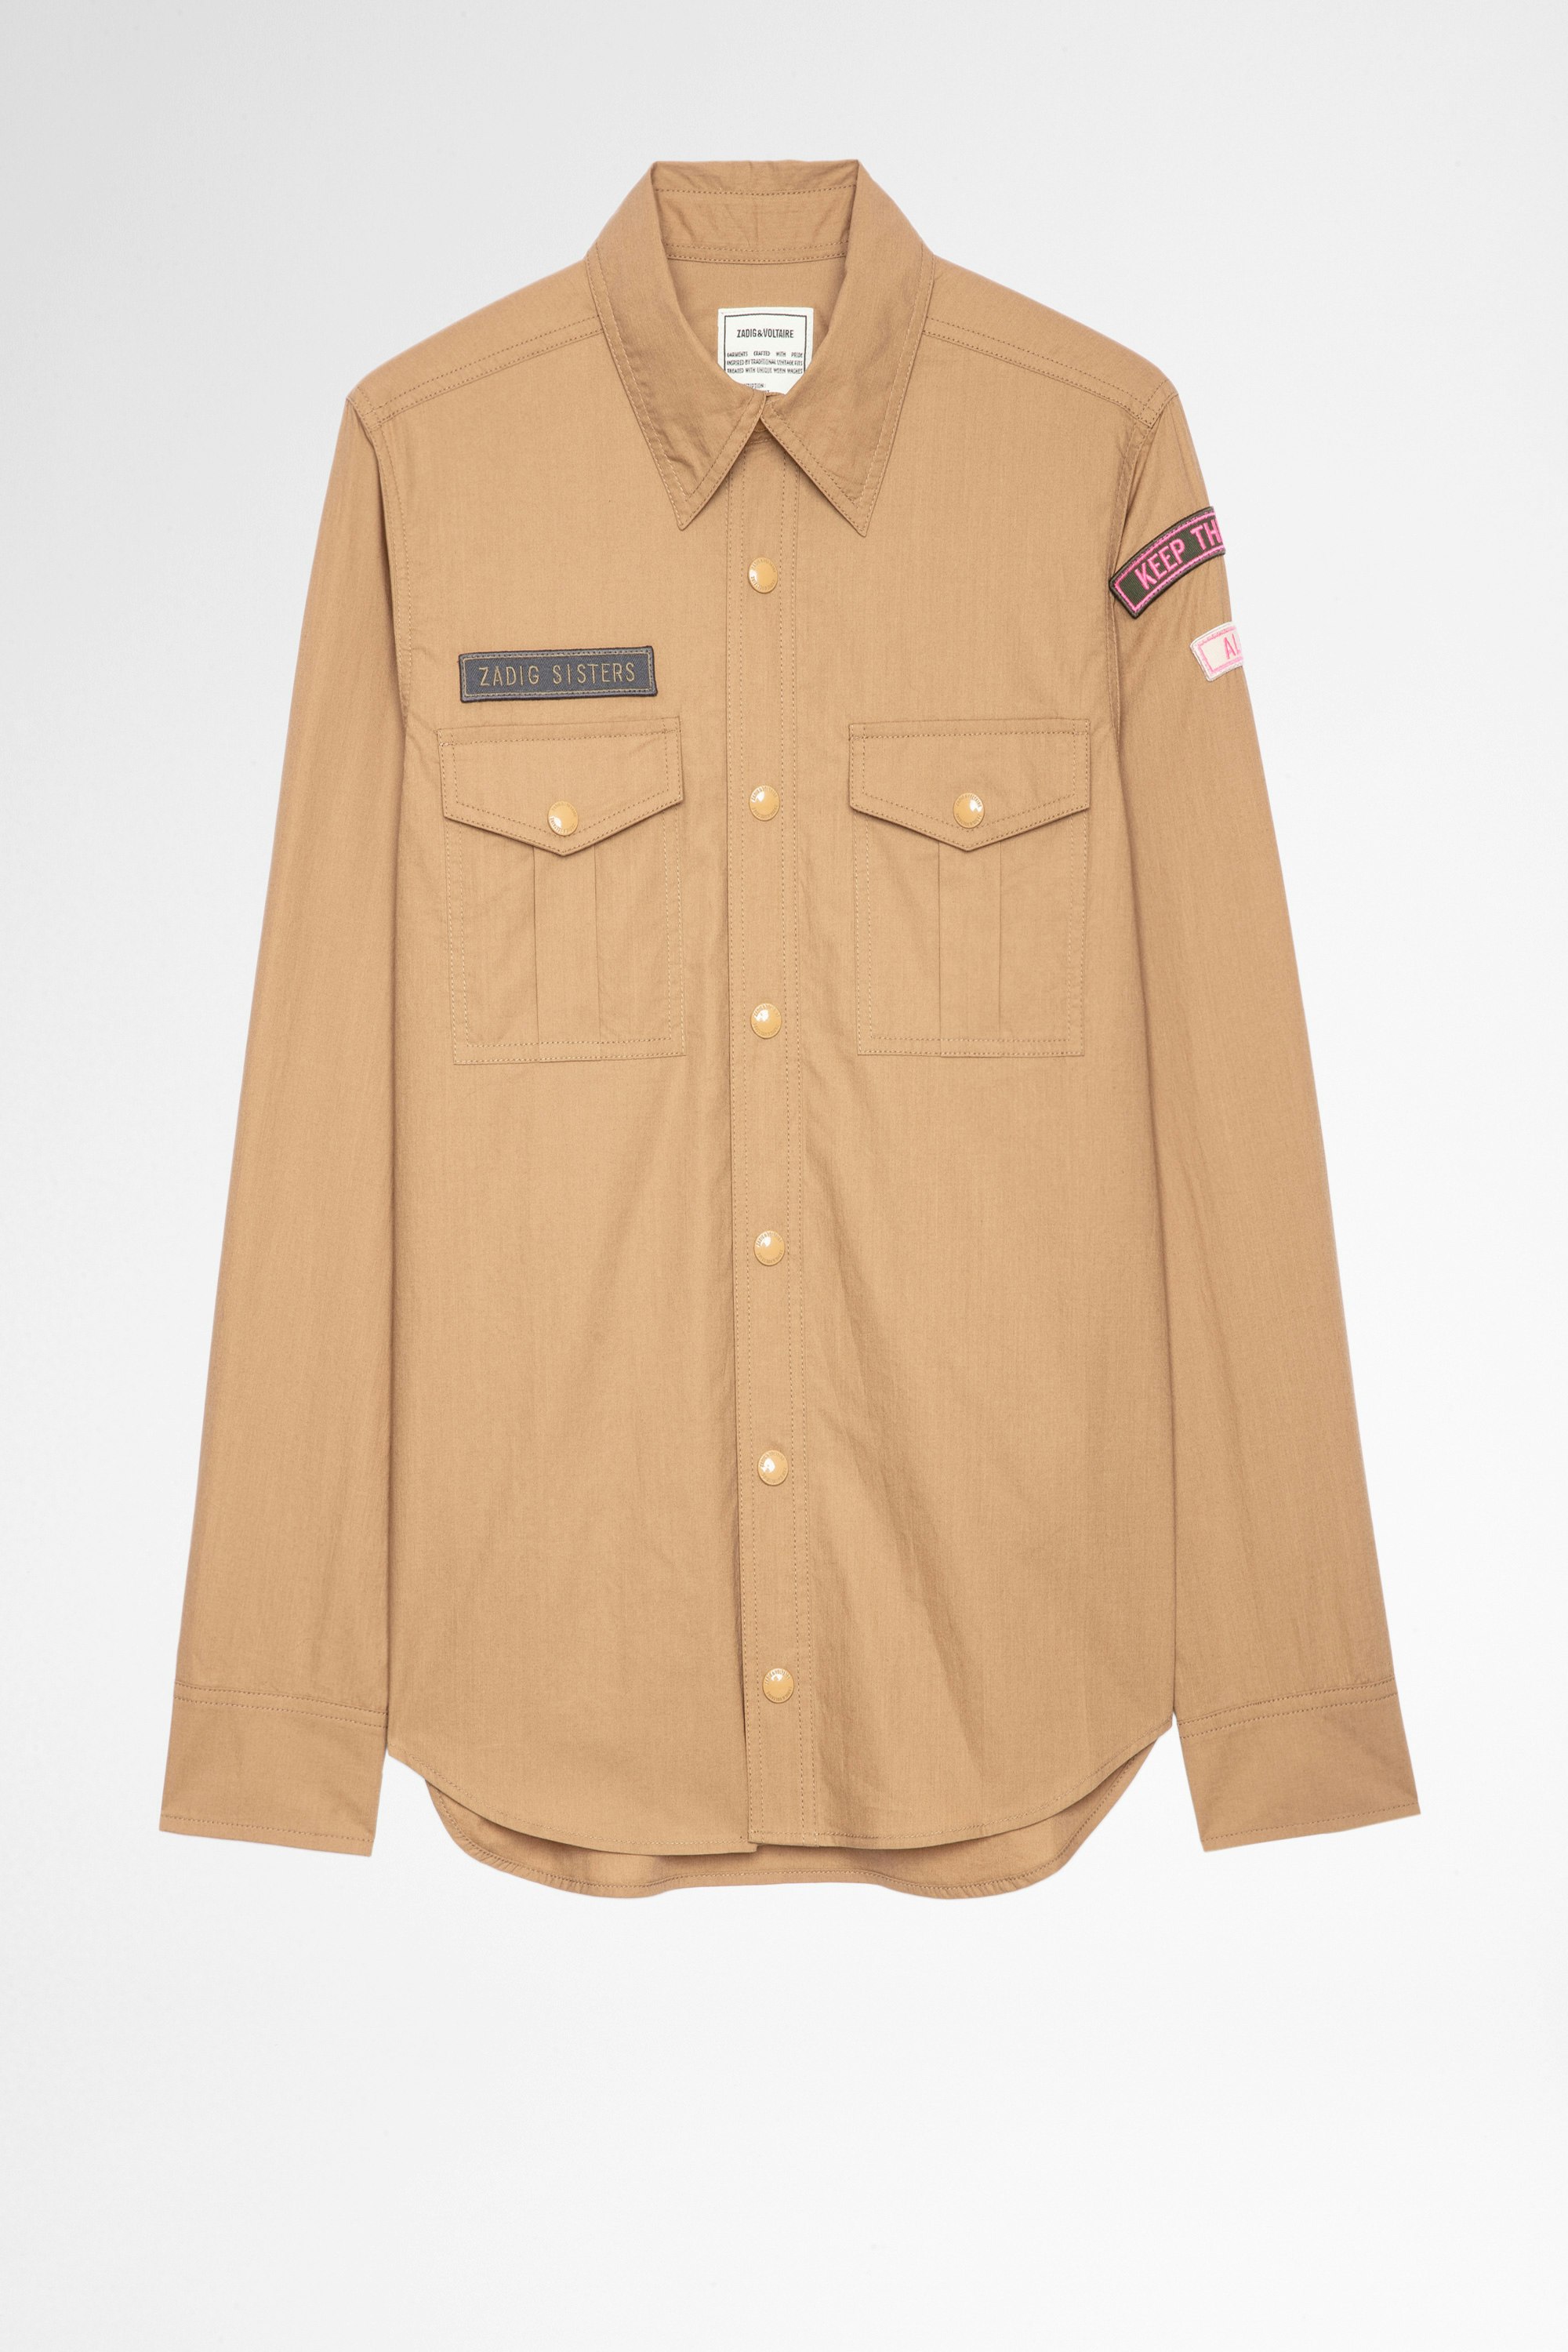 Camisa This Camisa militar de algodón en tono camello para mujer